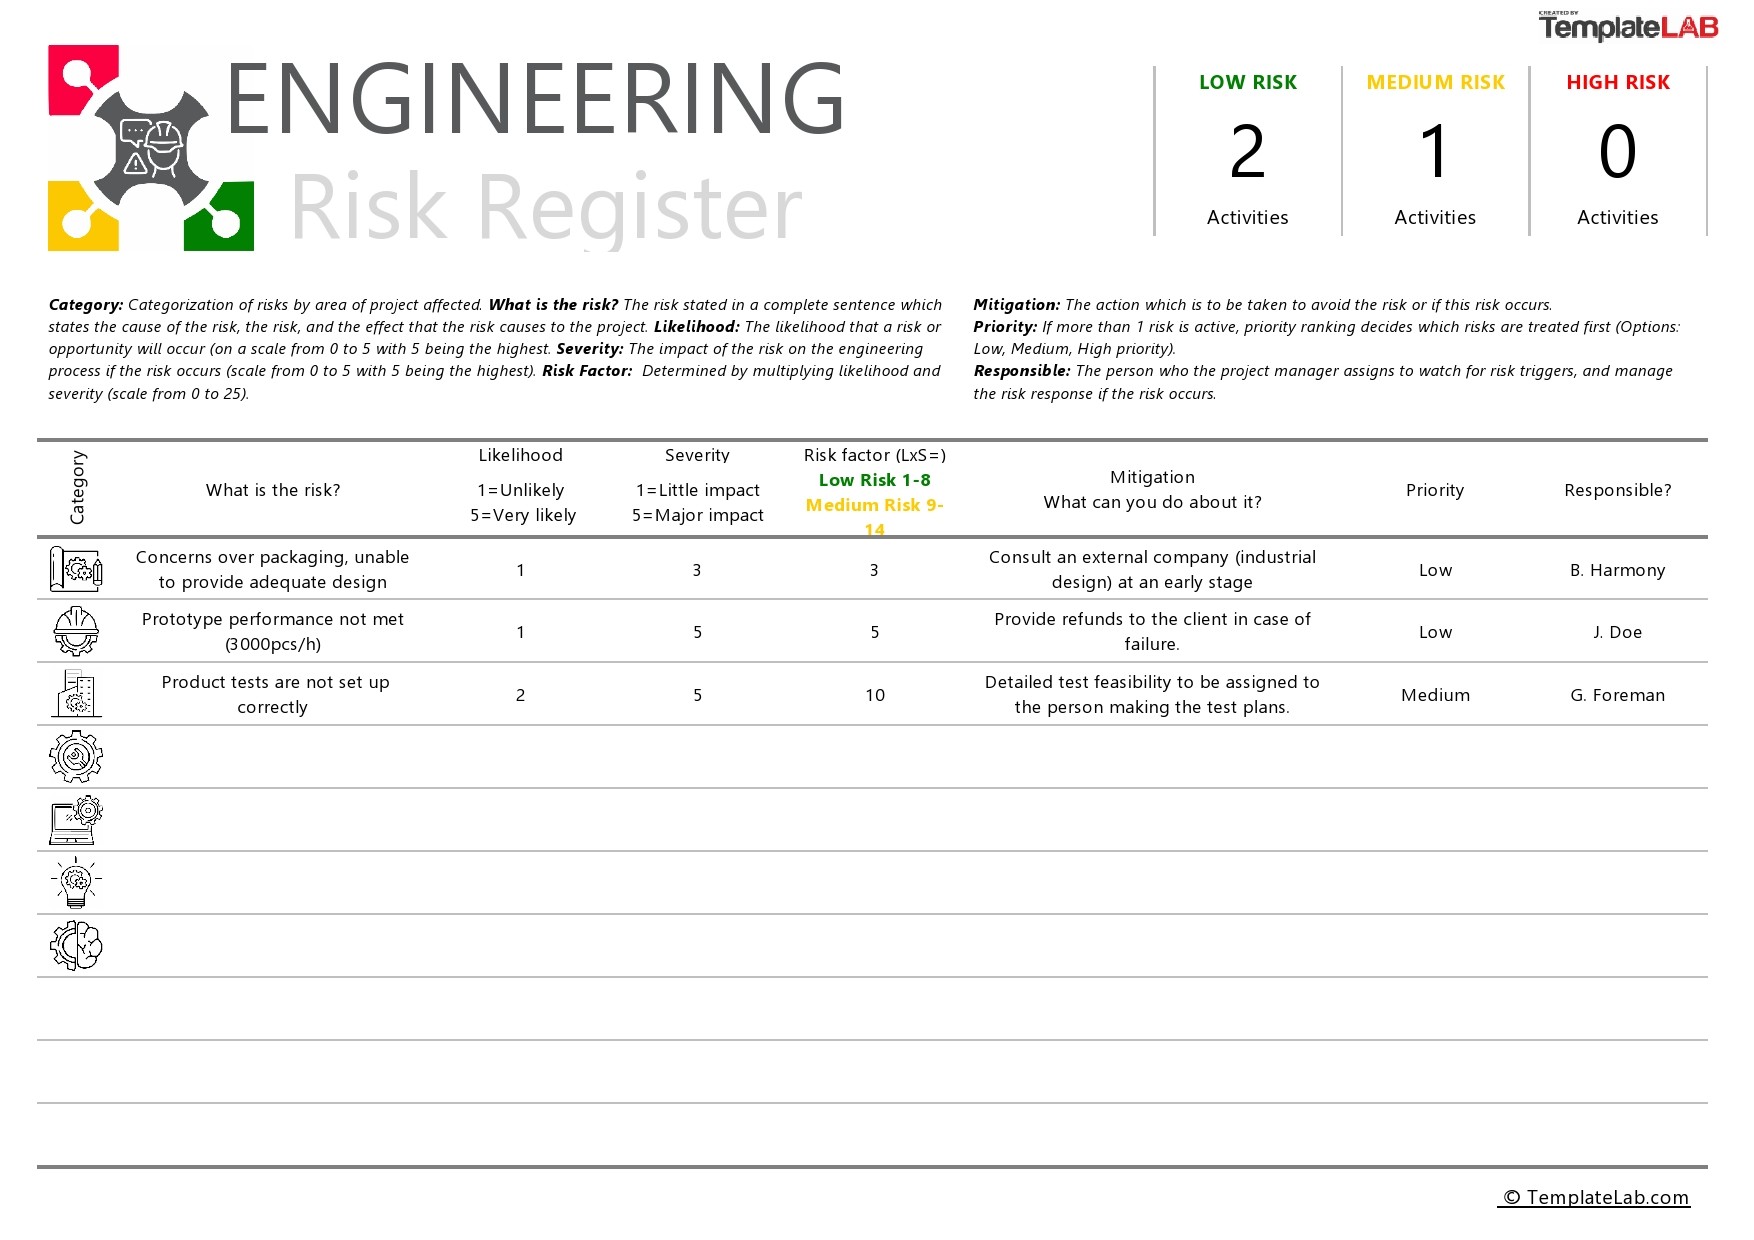 Free Engineering Risk register Template - TemplateLab.com